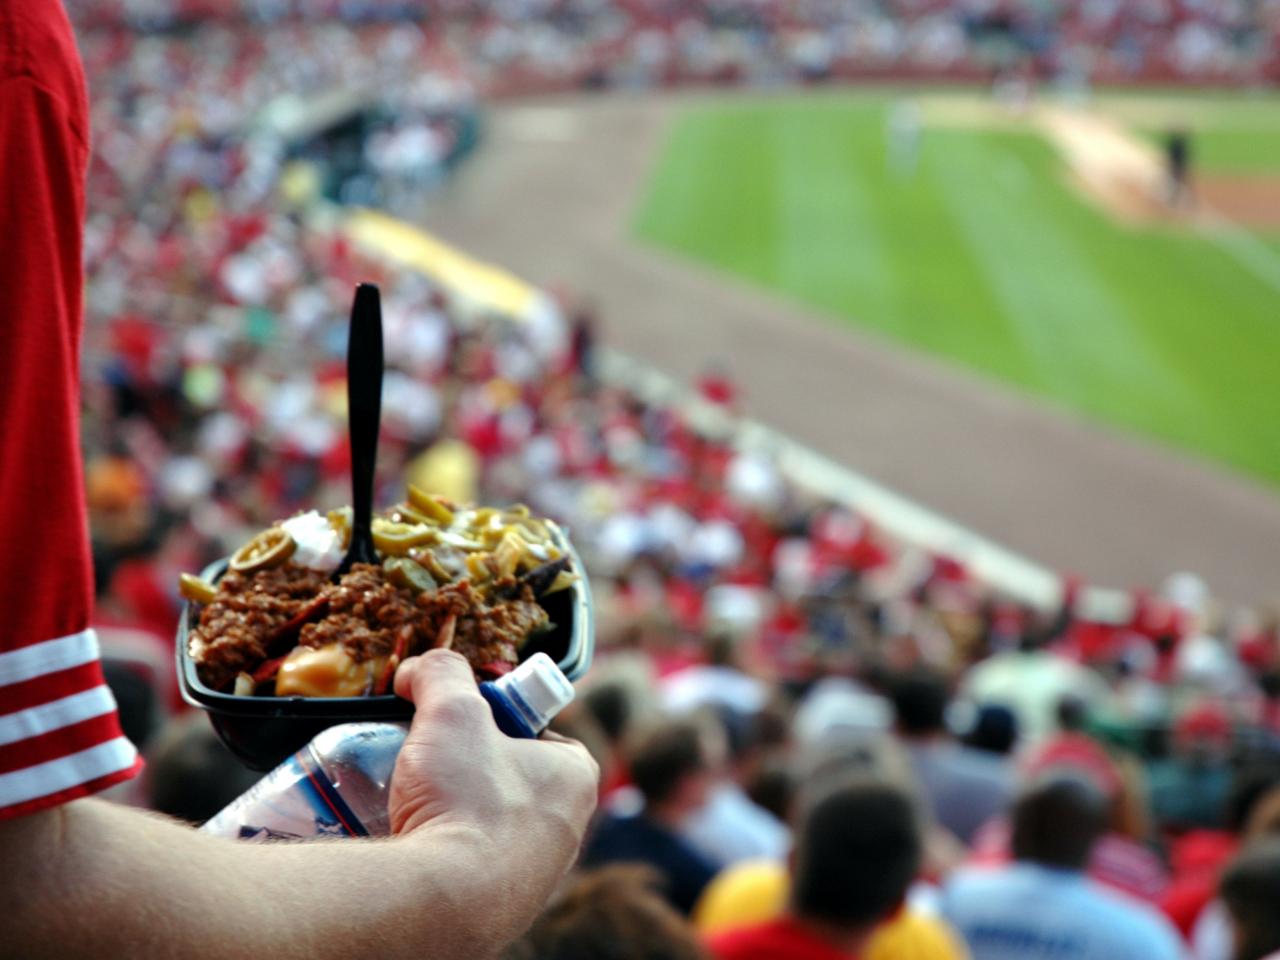 A new baseball season brings new foods to Great American Ball Park